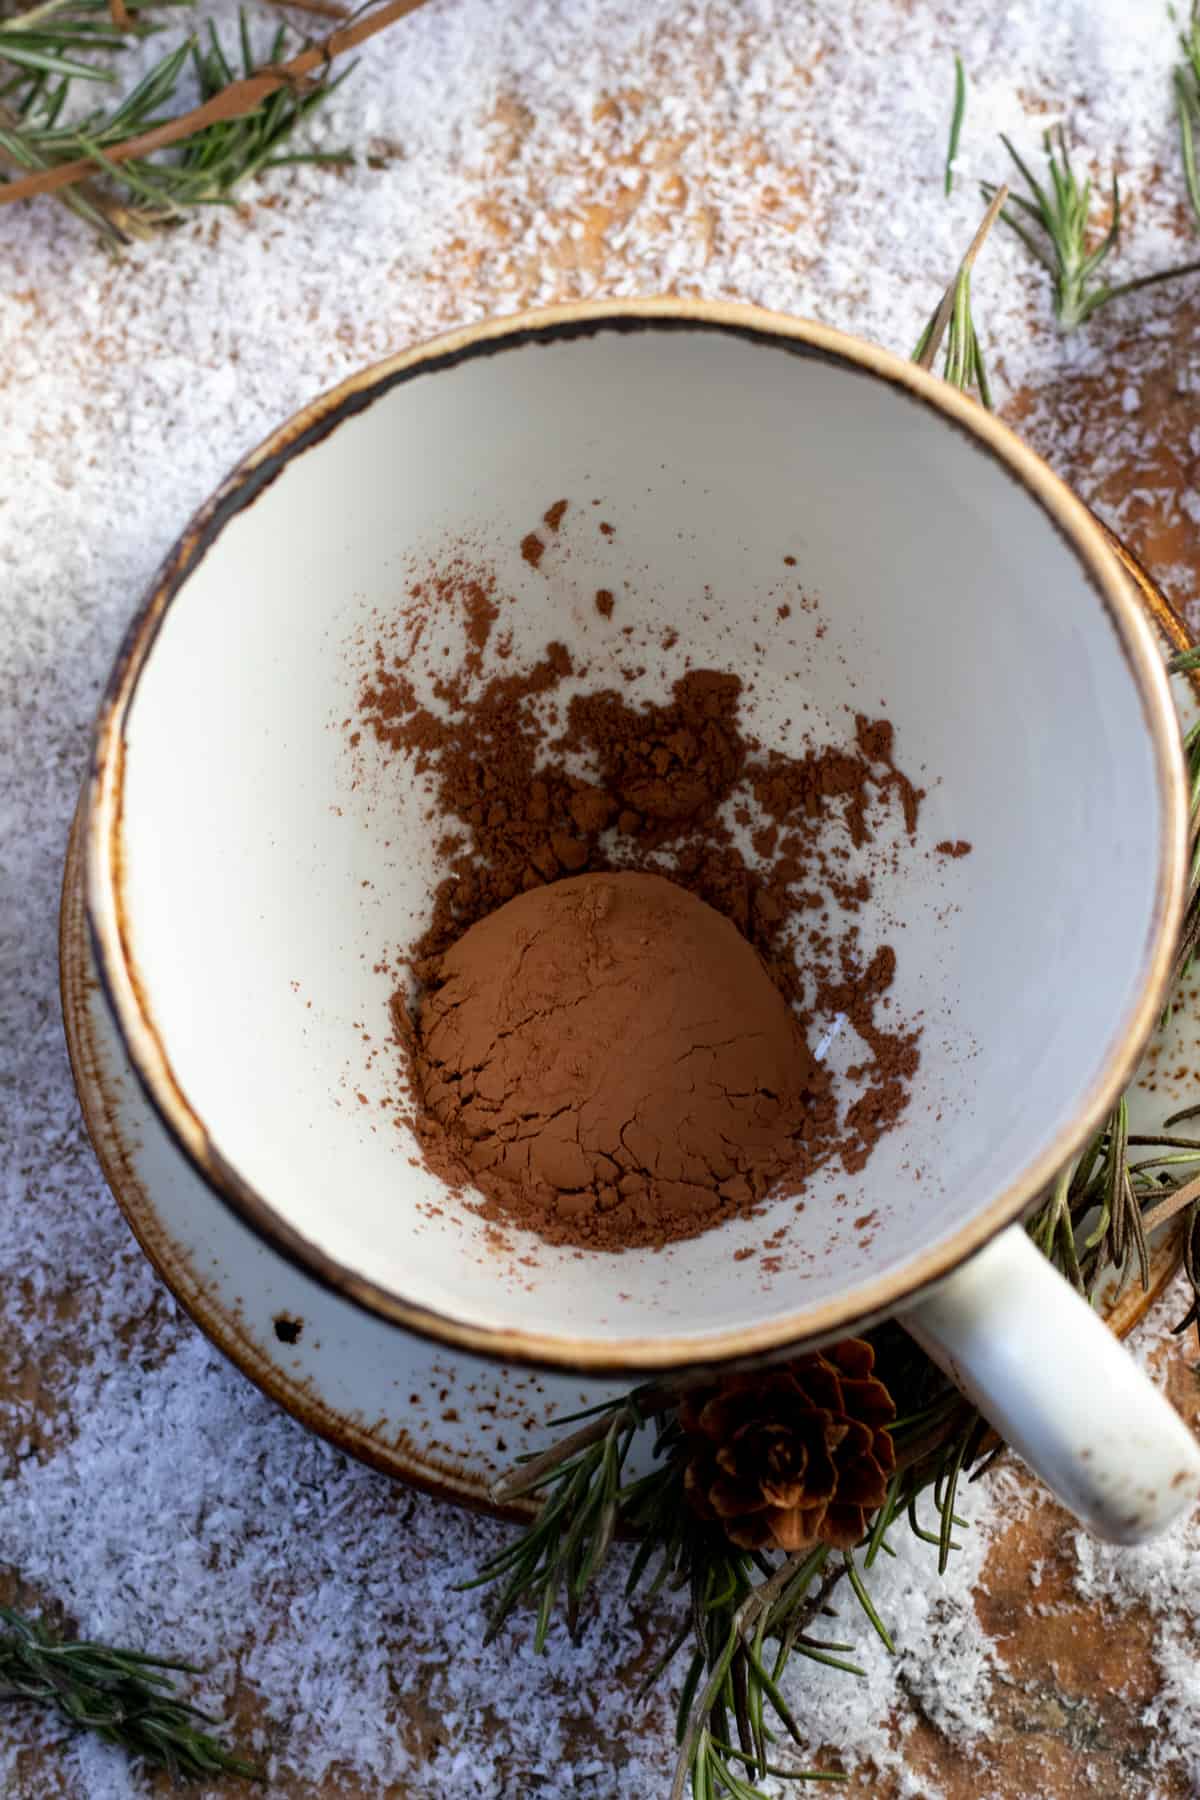 Cacao powder added to mug.